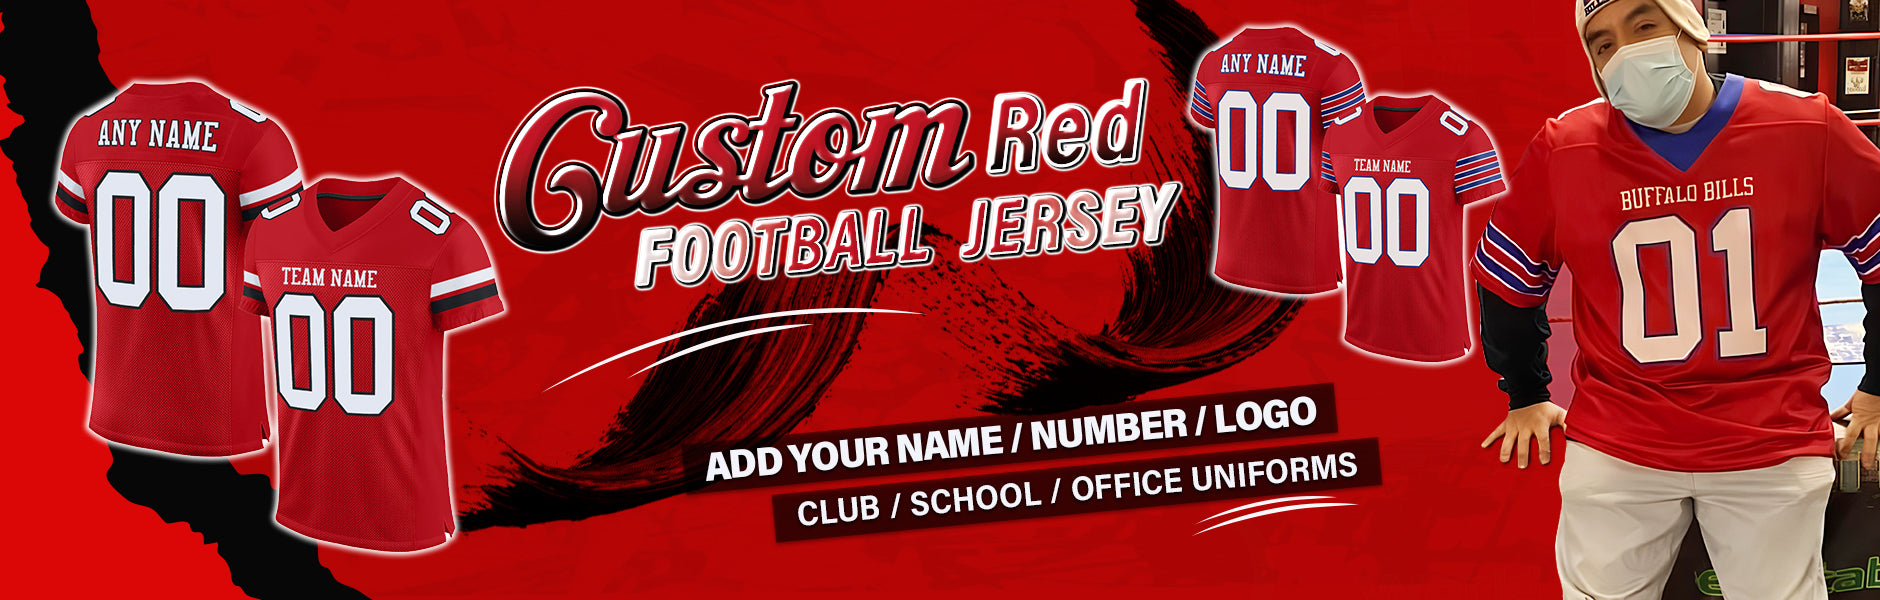 custom football red jersey